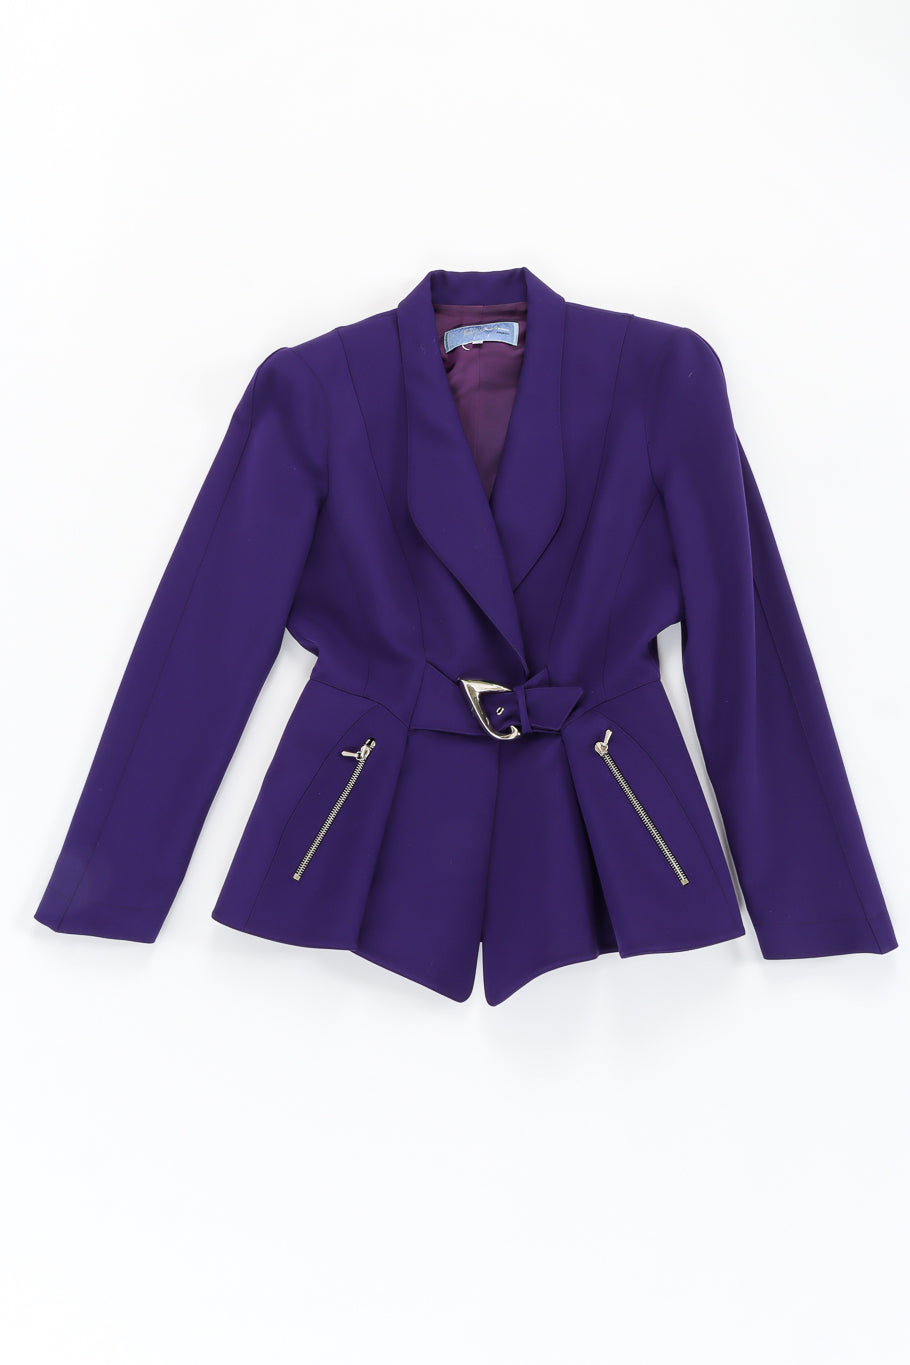 Vintage Thierry Mugler Buckle Jacket & Skirt Suit Set jacket flat lay @ Recess LA